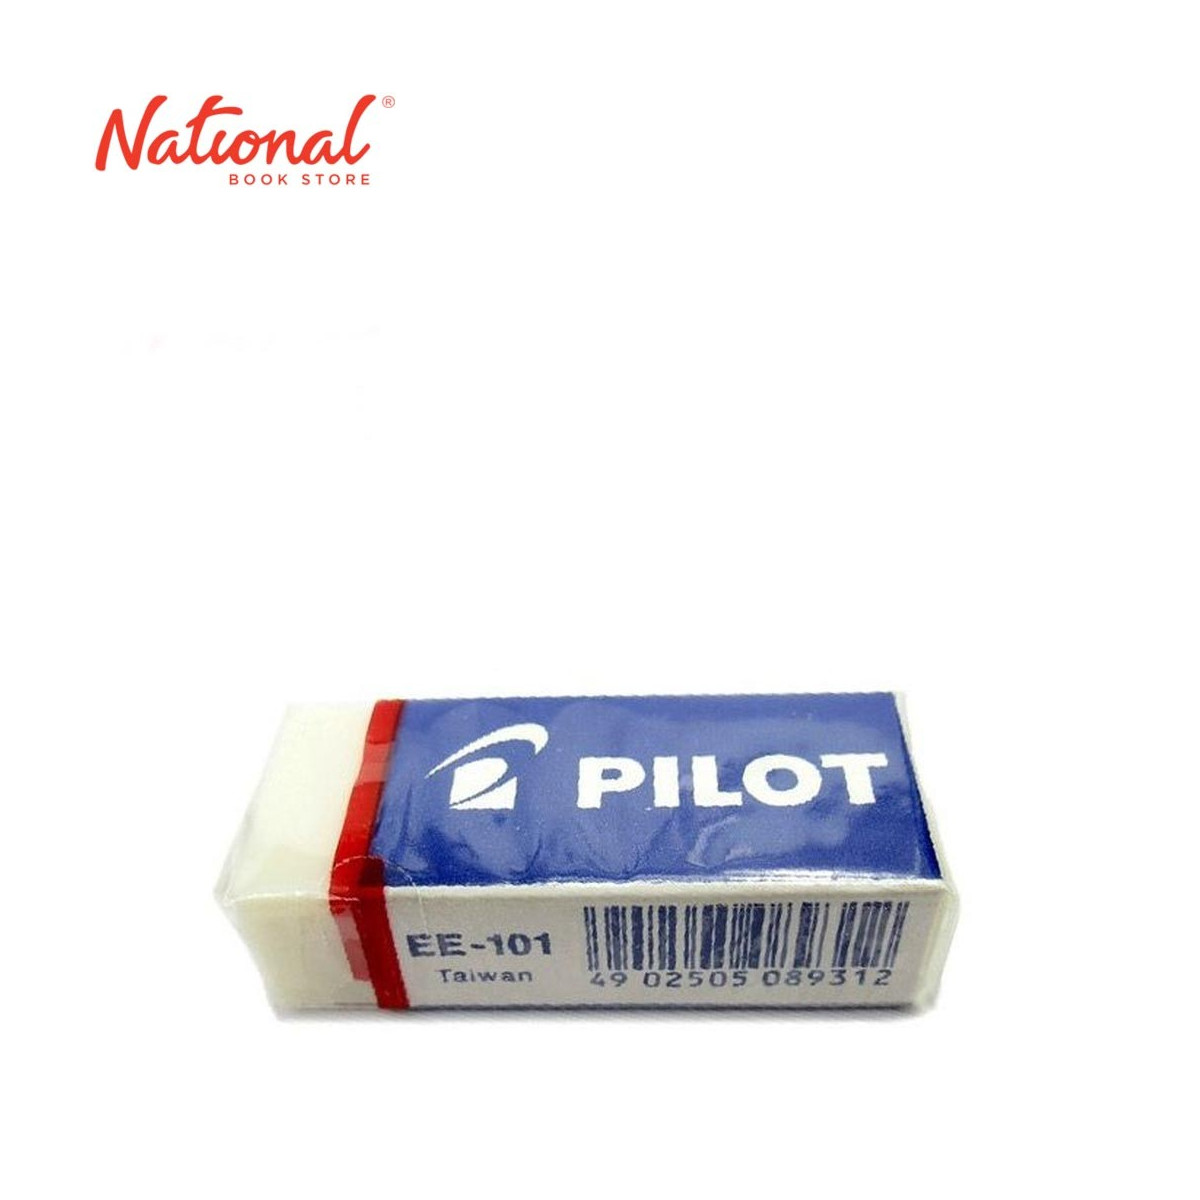 PILOT PLASTIC ERASER EE-101 WHITE SMALL